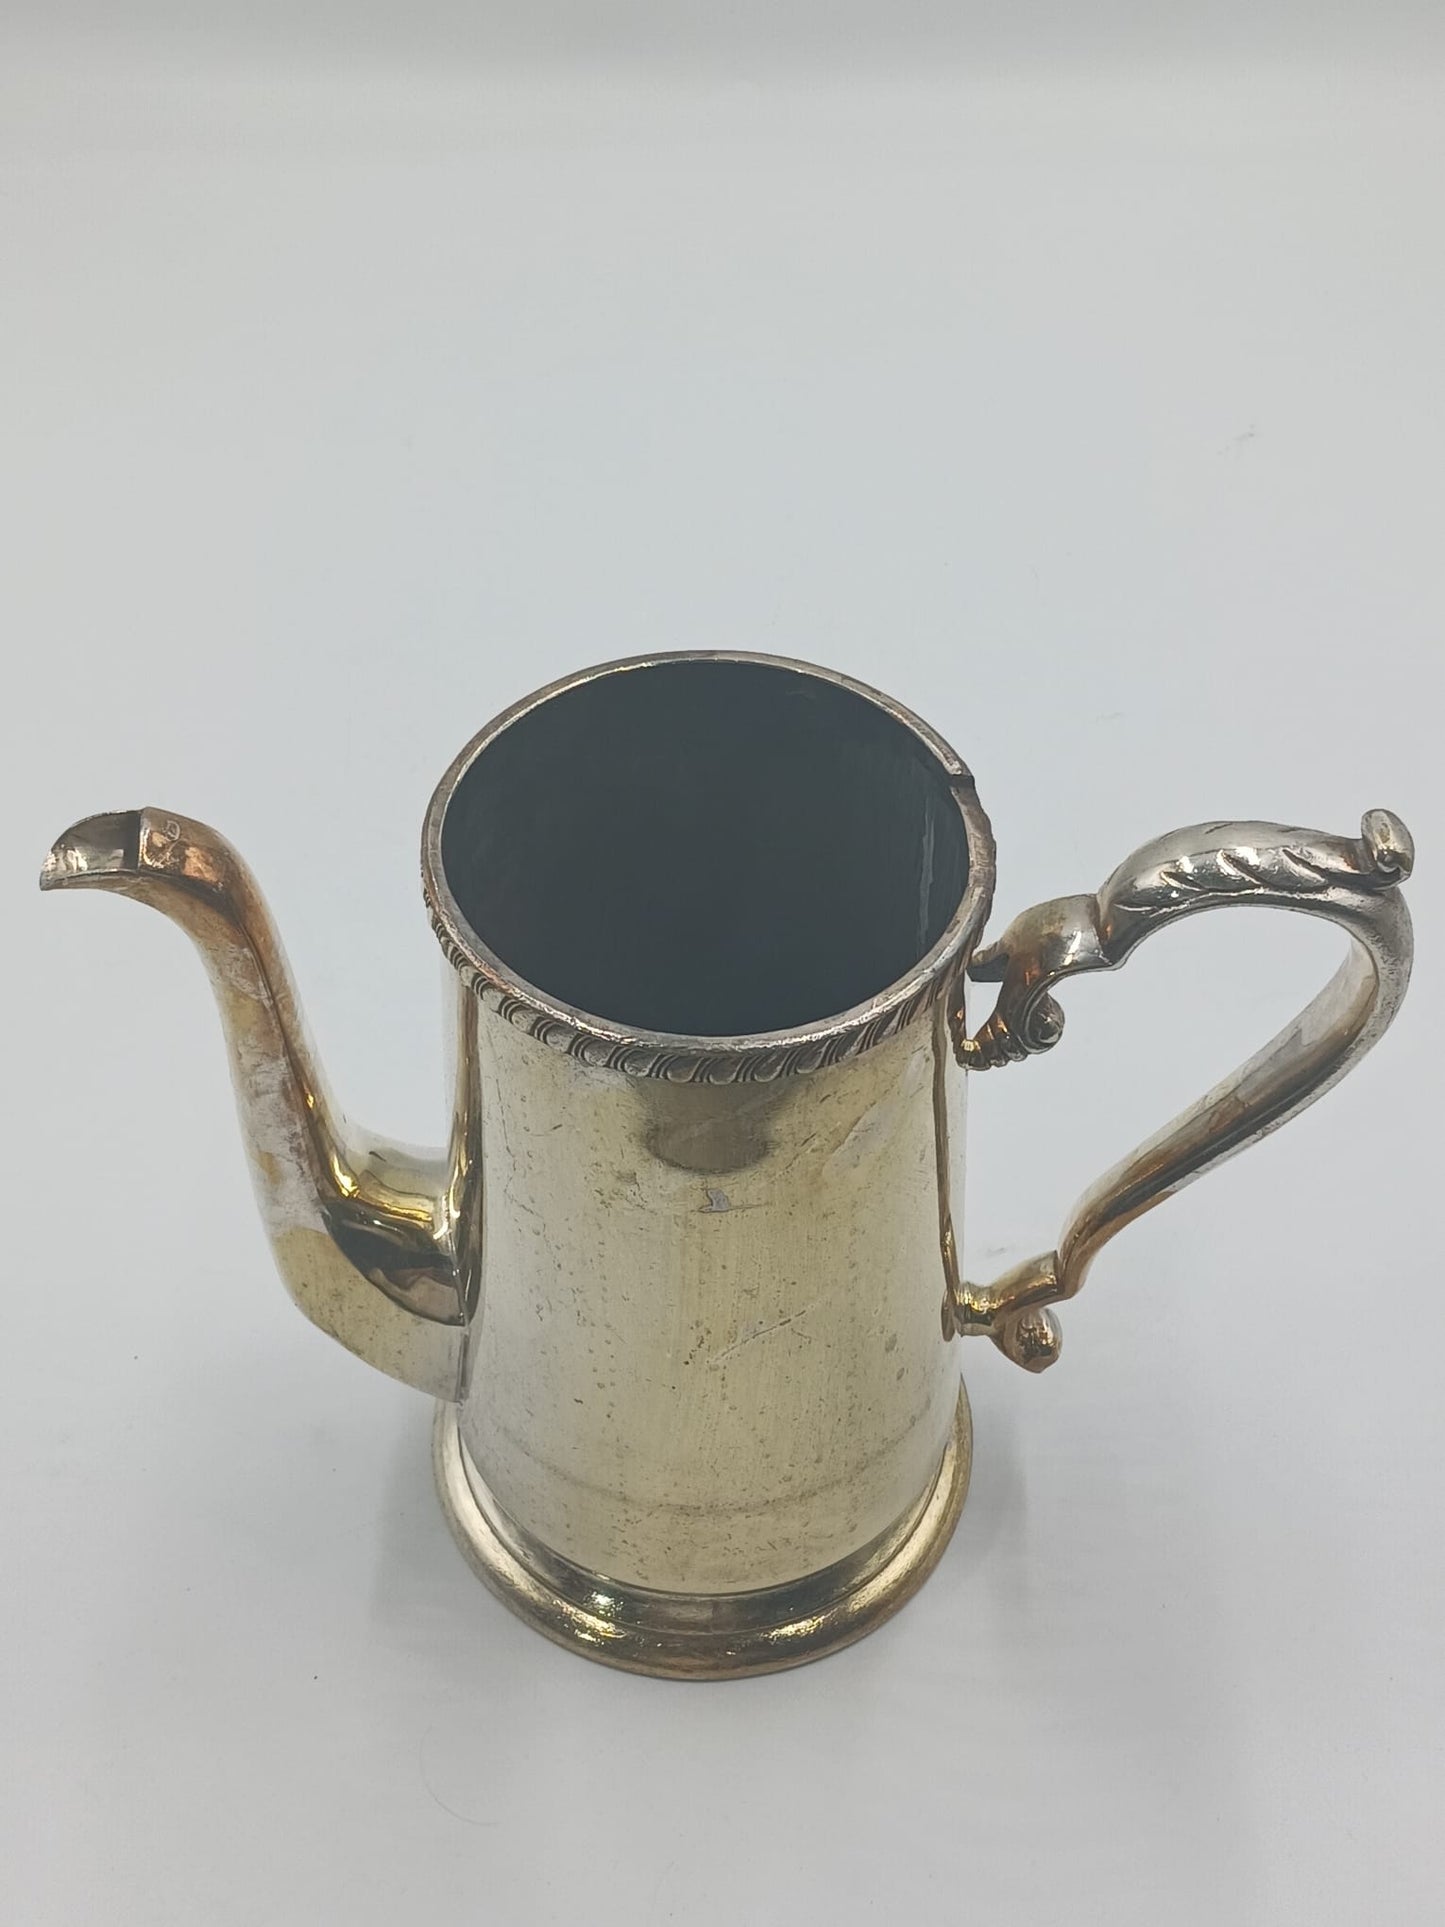 10" Vintage Metal coffee pots International Silver Co. - No Lid